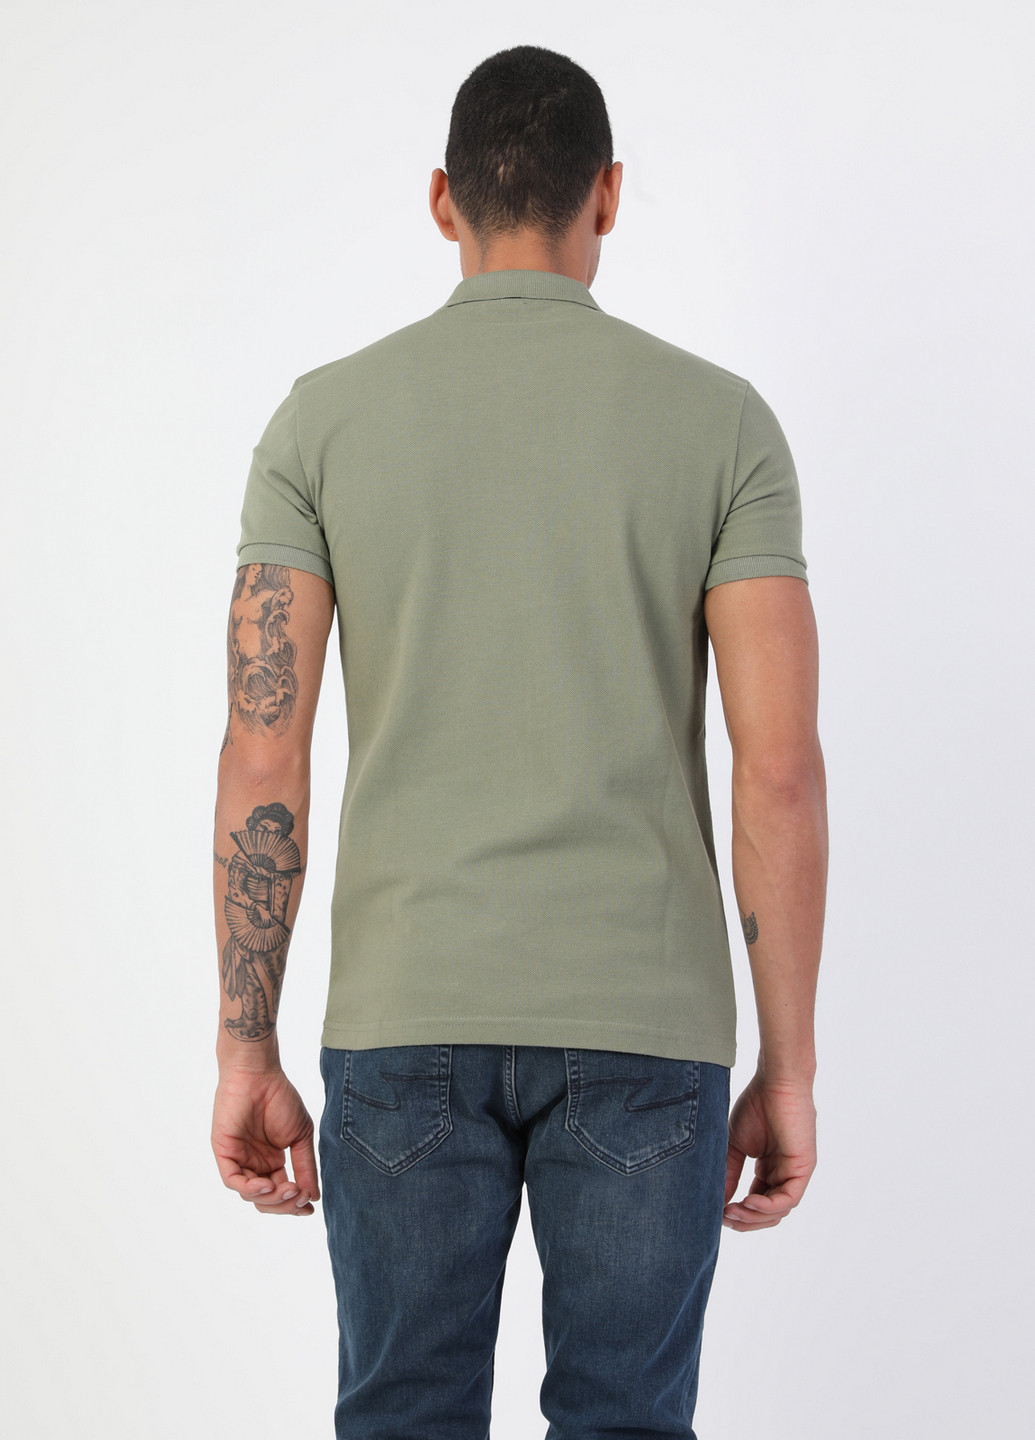 Серо-зеленая футболка-поло для мужчин Colin's однотонная